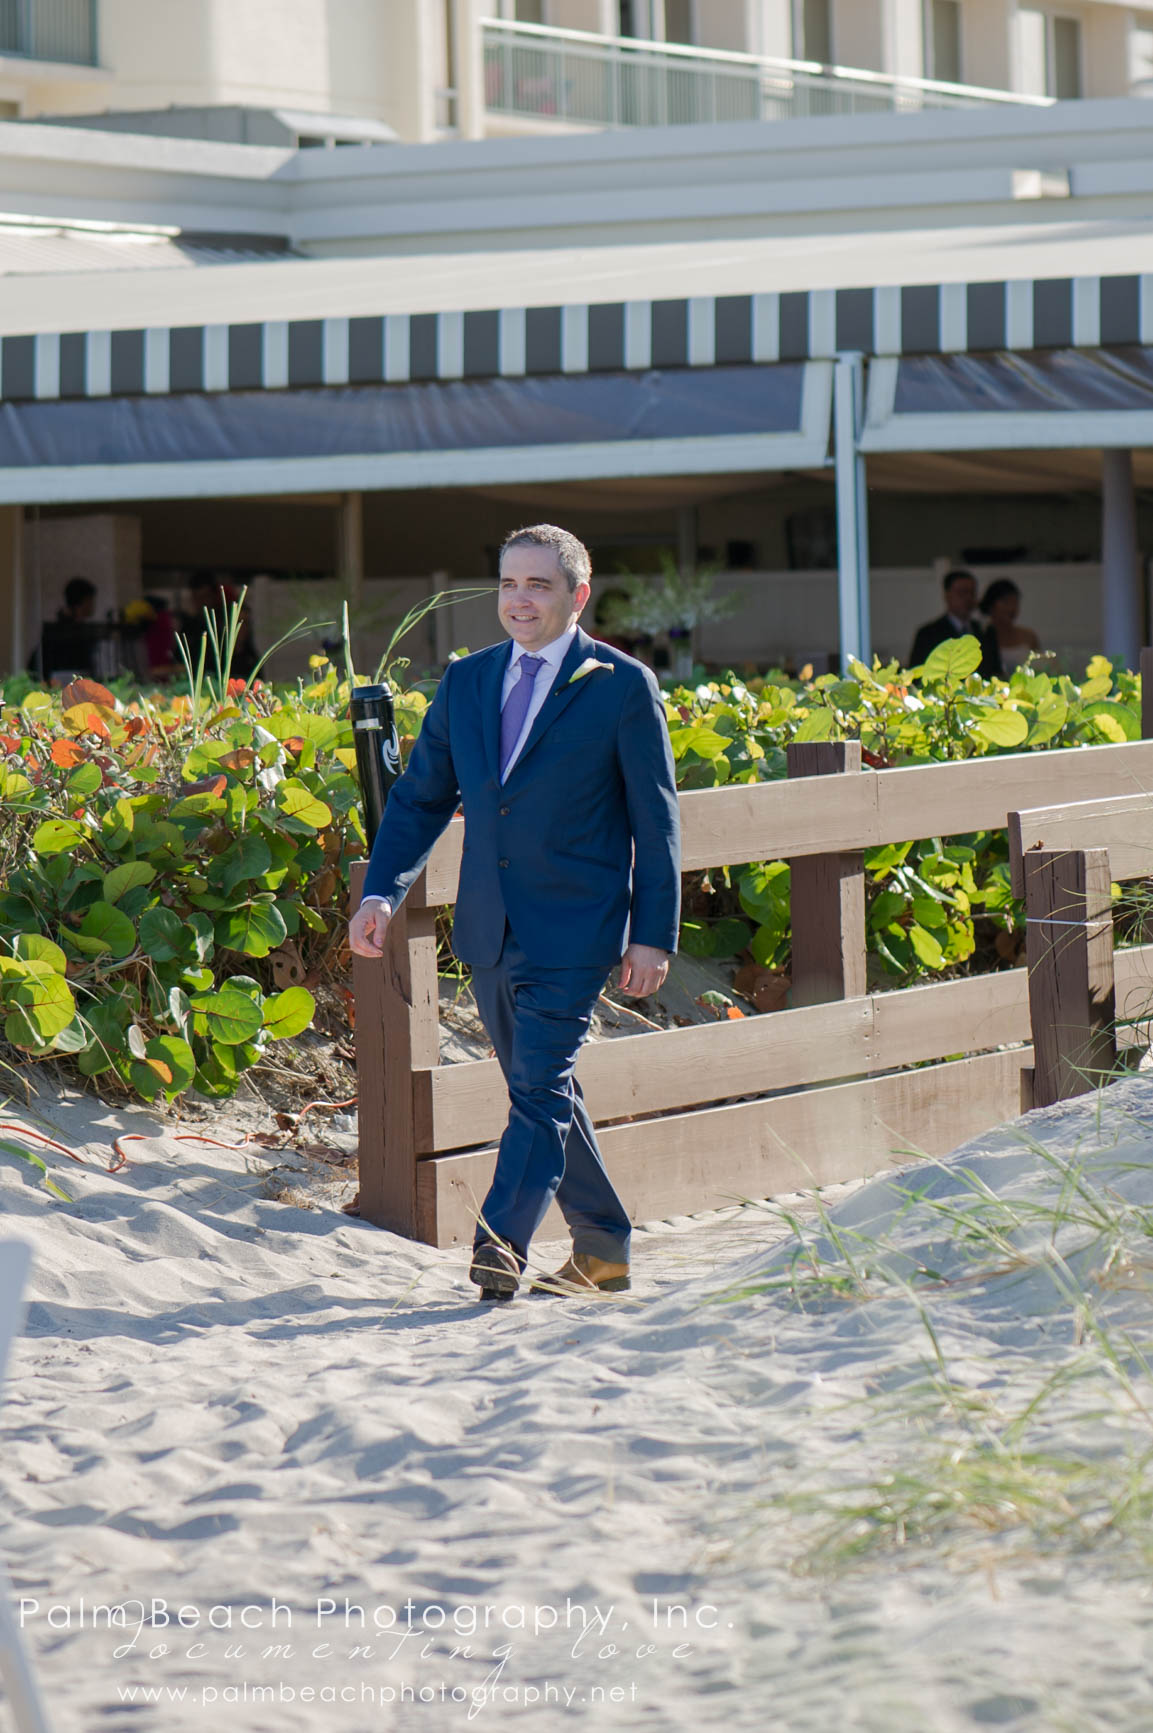 Hilton Singer Island Seaside Wedding by Palm Beach Photography, Inc.